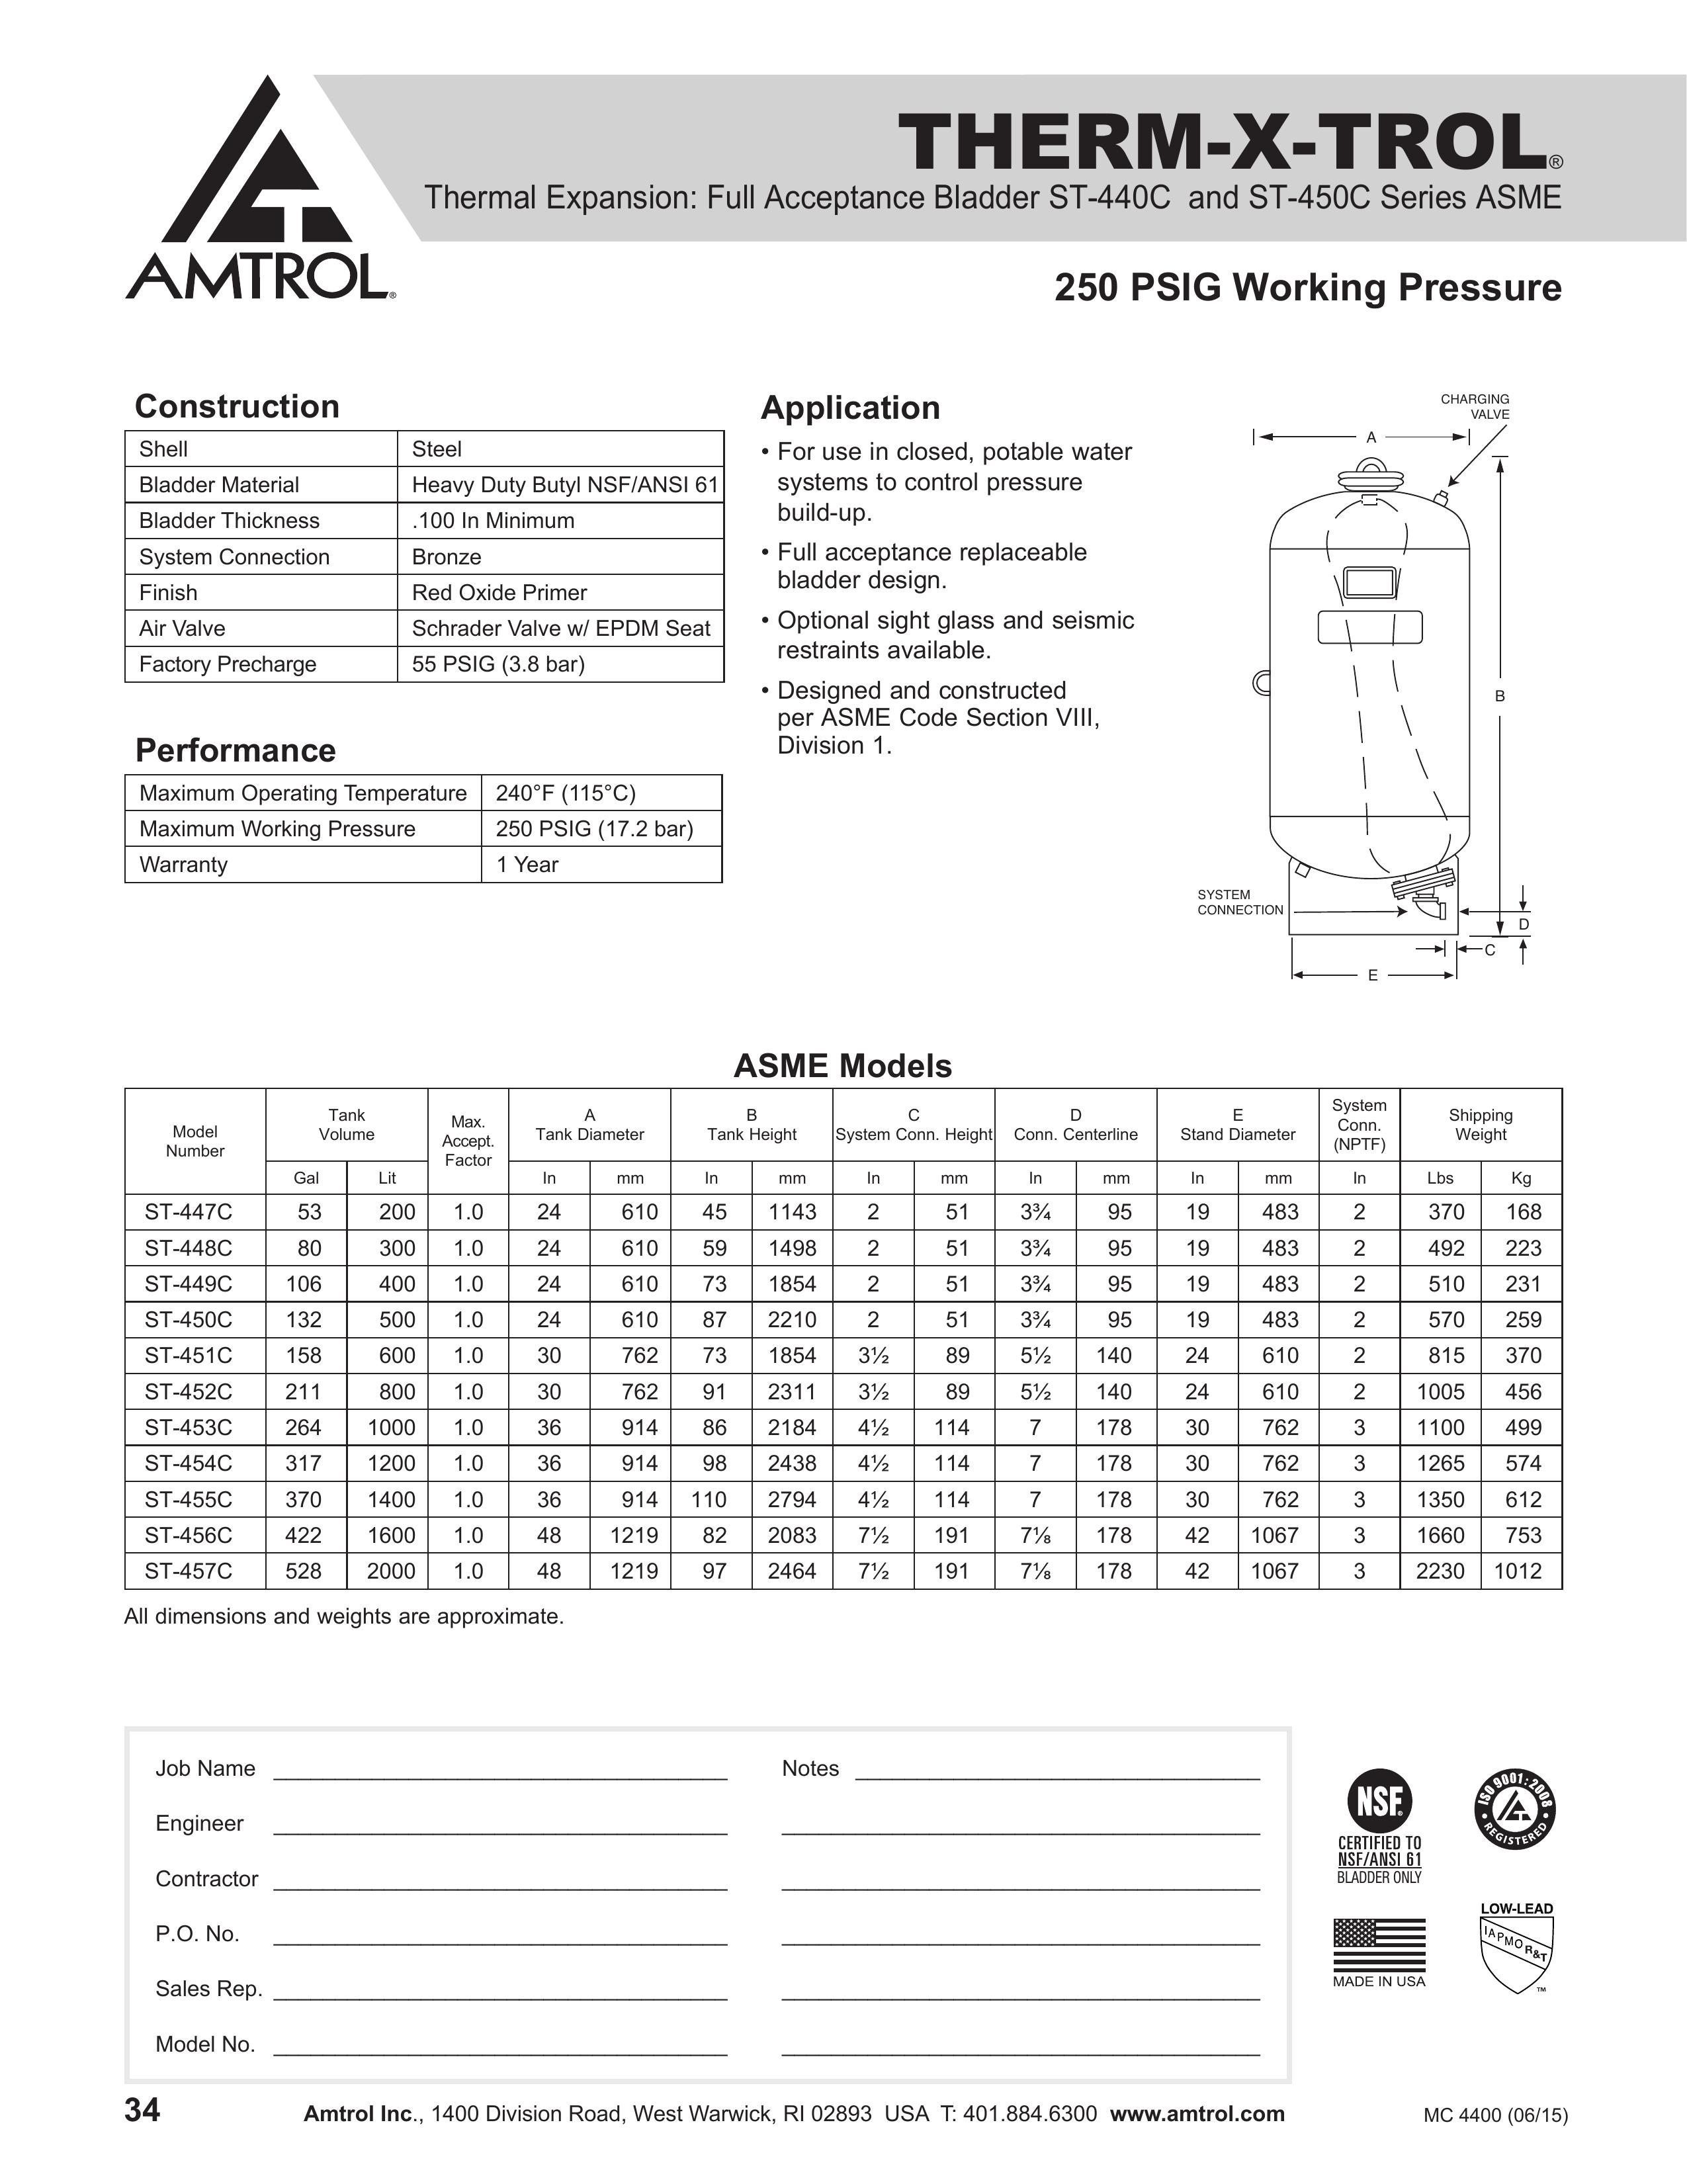 Amtrol ST-451C Slow Cooker User Manual